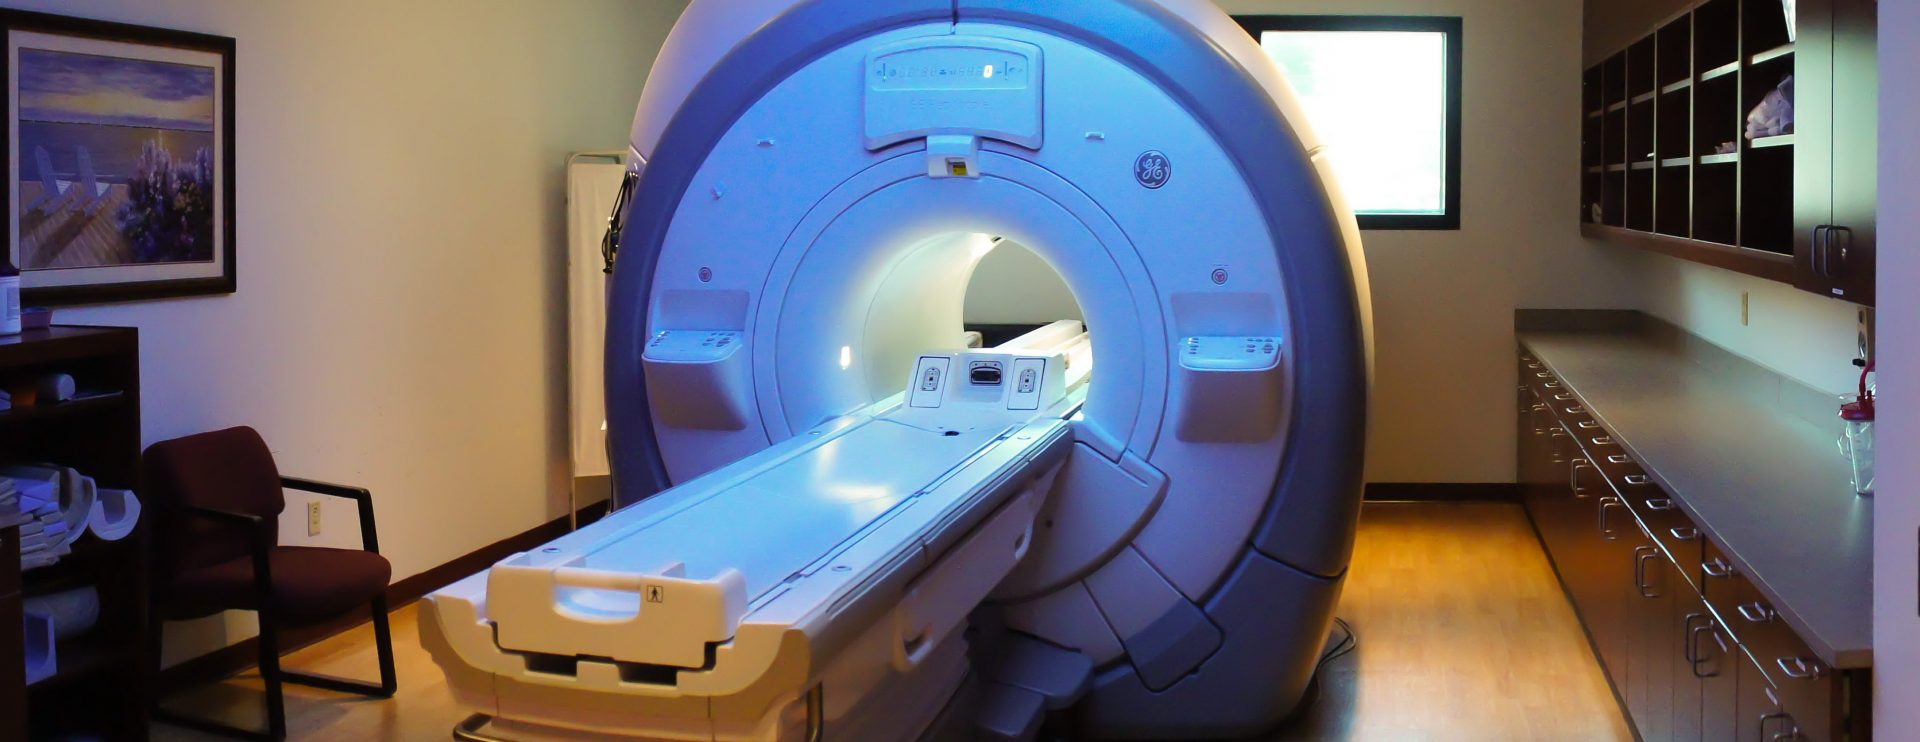 MRI Knee Case Study